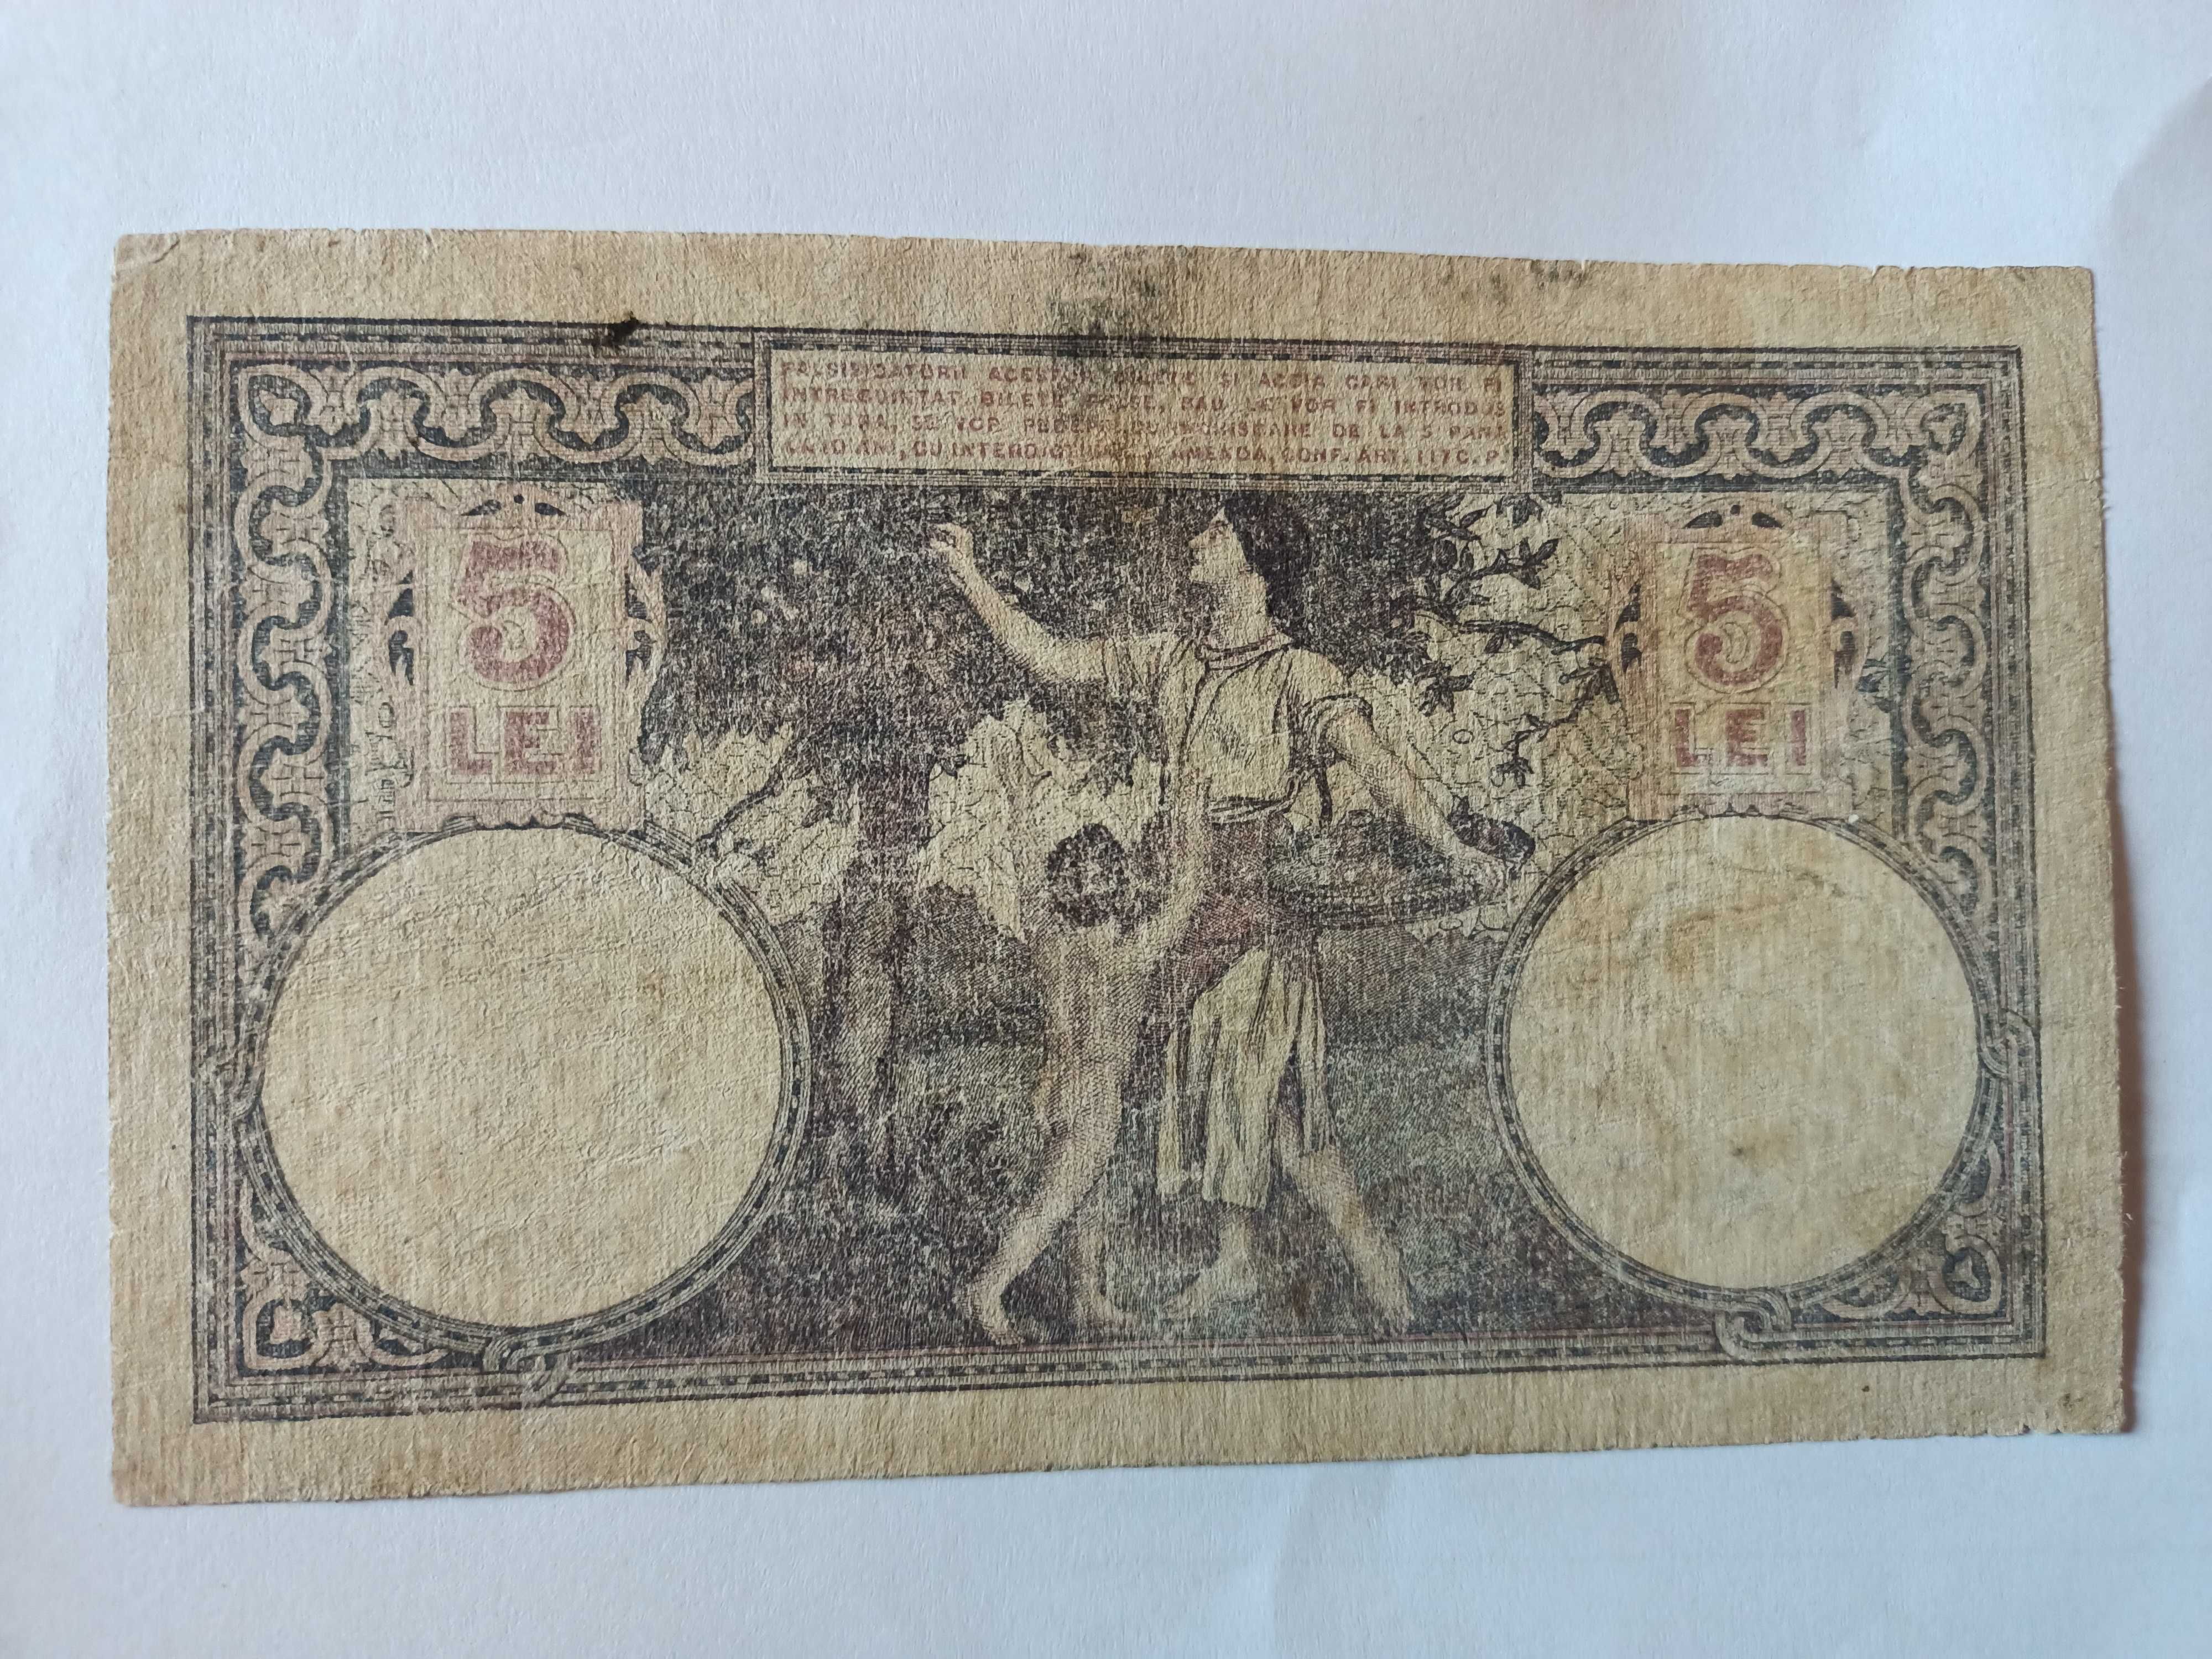 bancnota 5 lei 1929